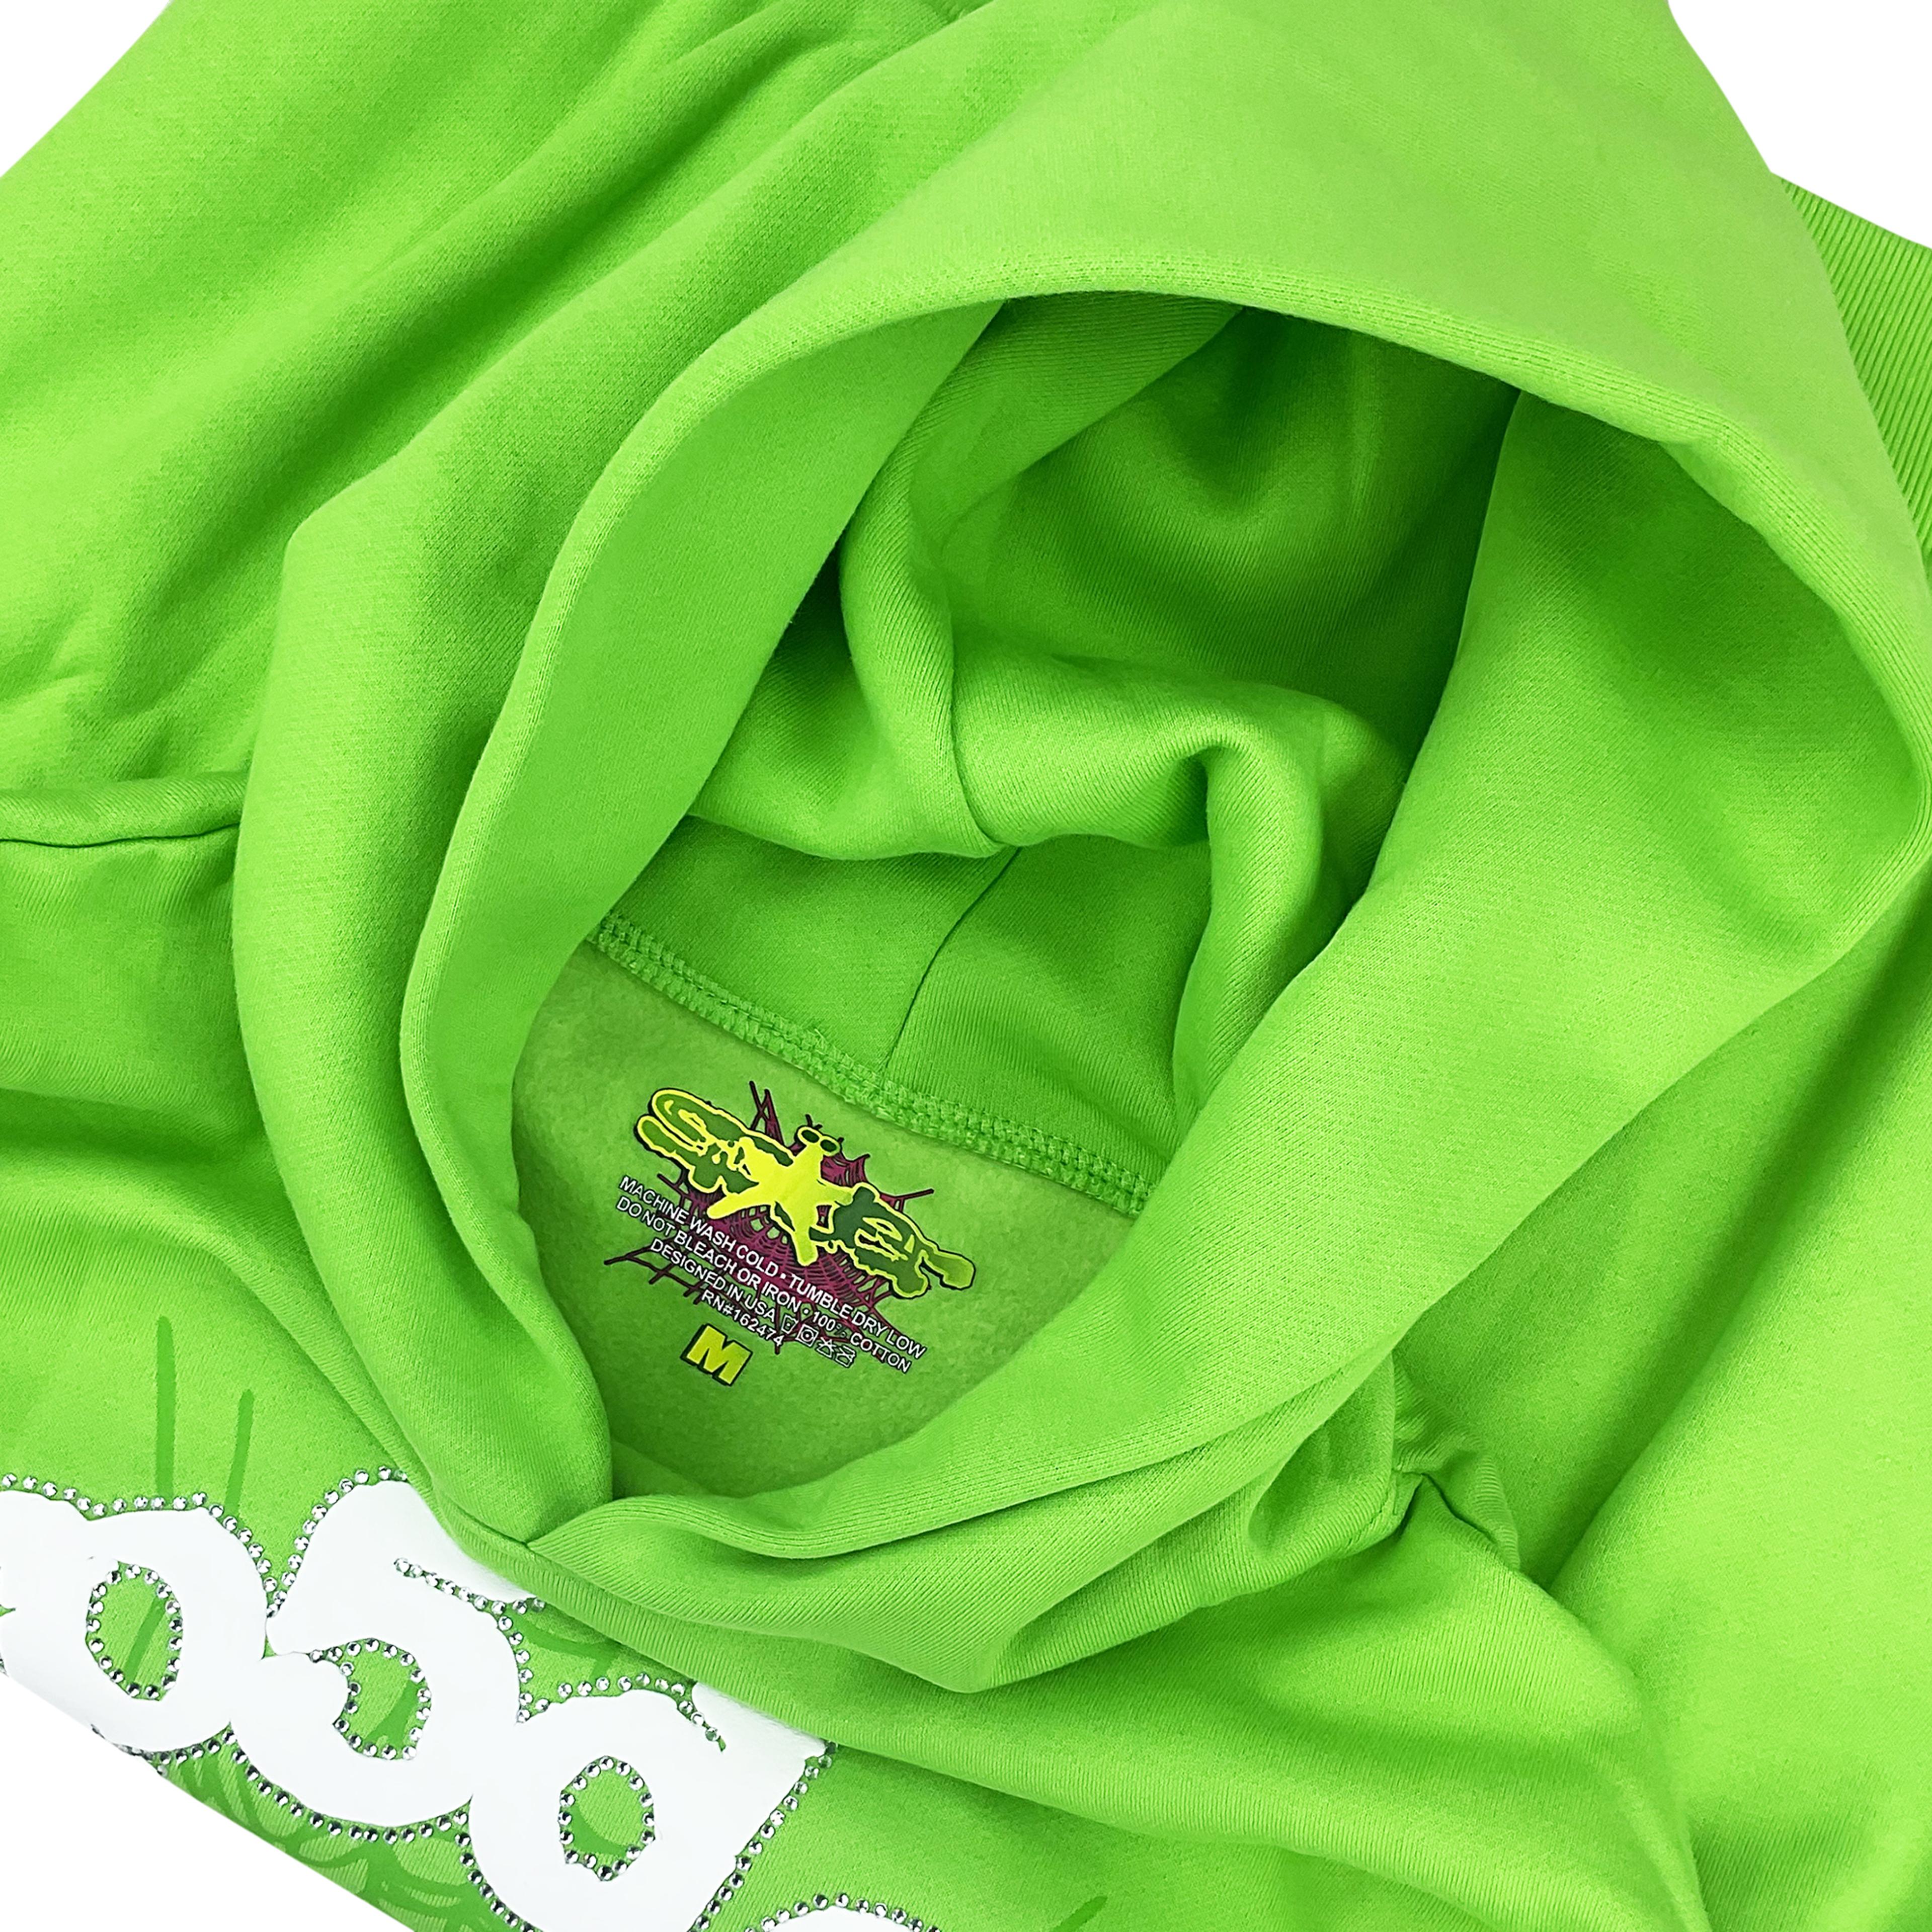 Alternate View 2 of Sp5der Web Hoodie Sweatshirt Slime Green | Spider Worldwide